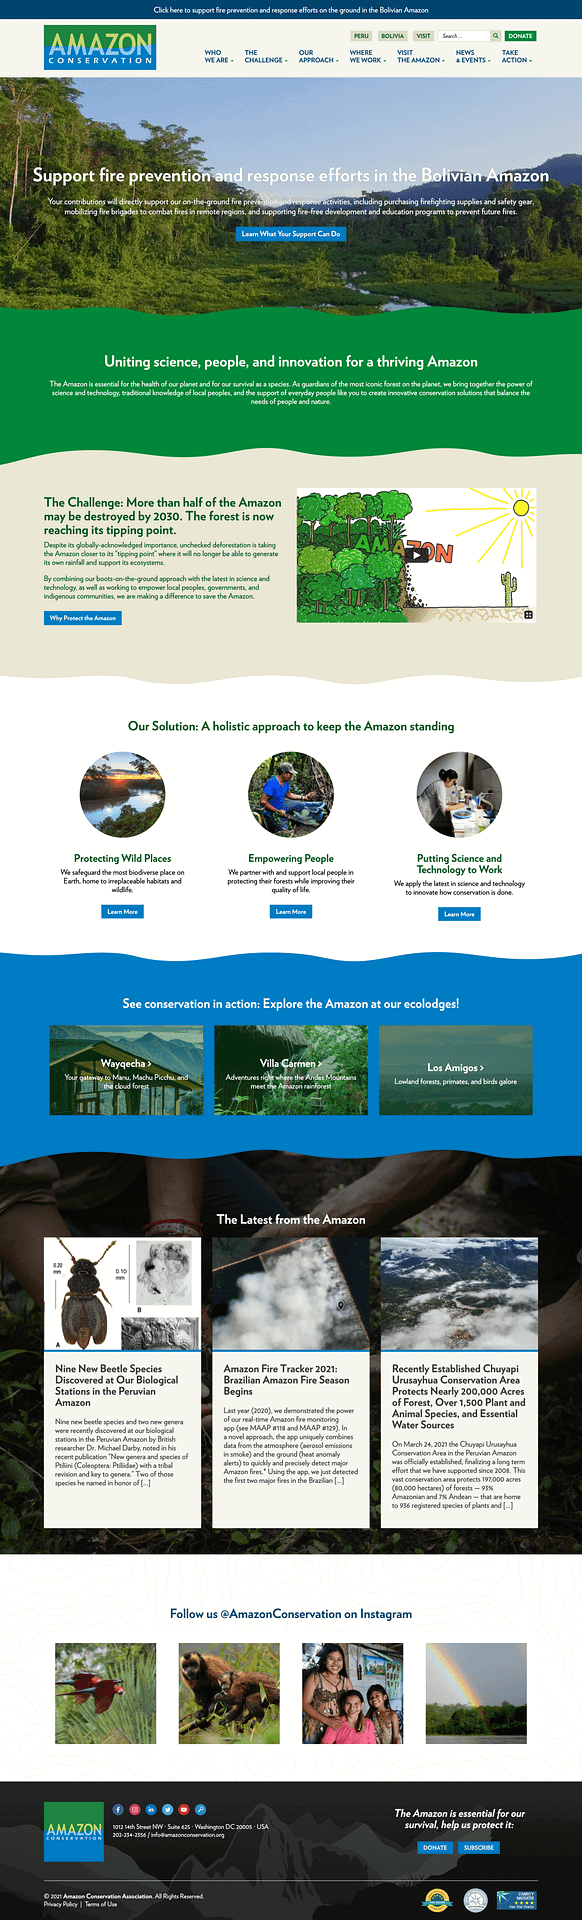 Amazon Conservation Association website design detail